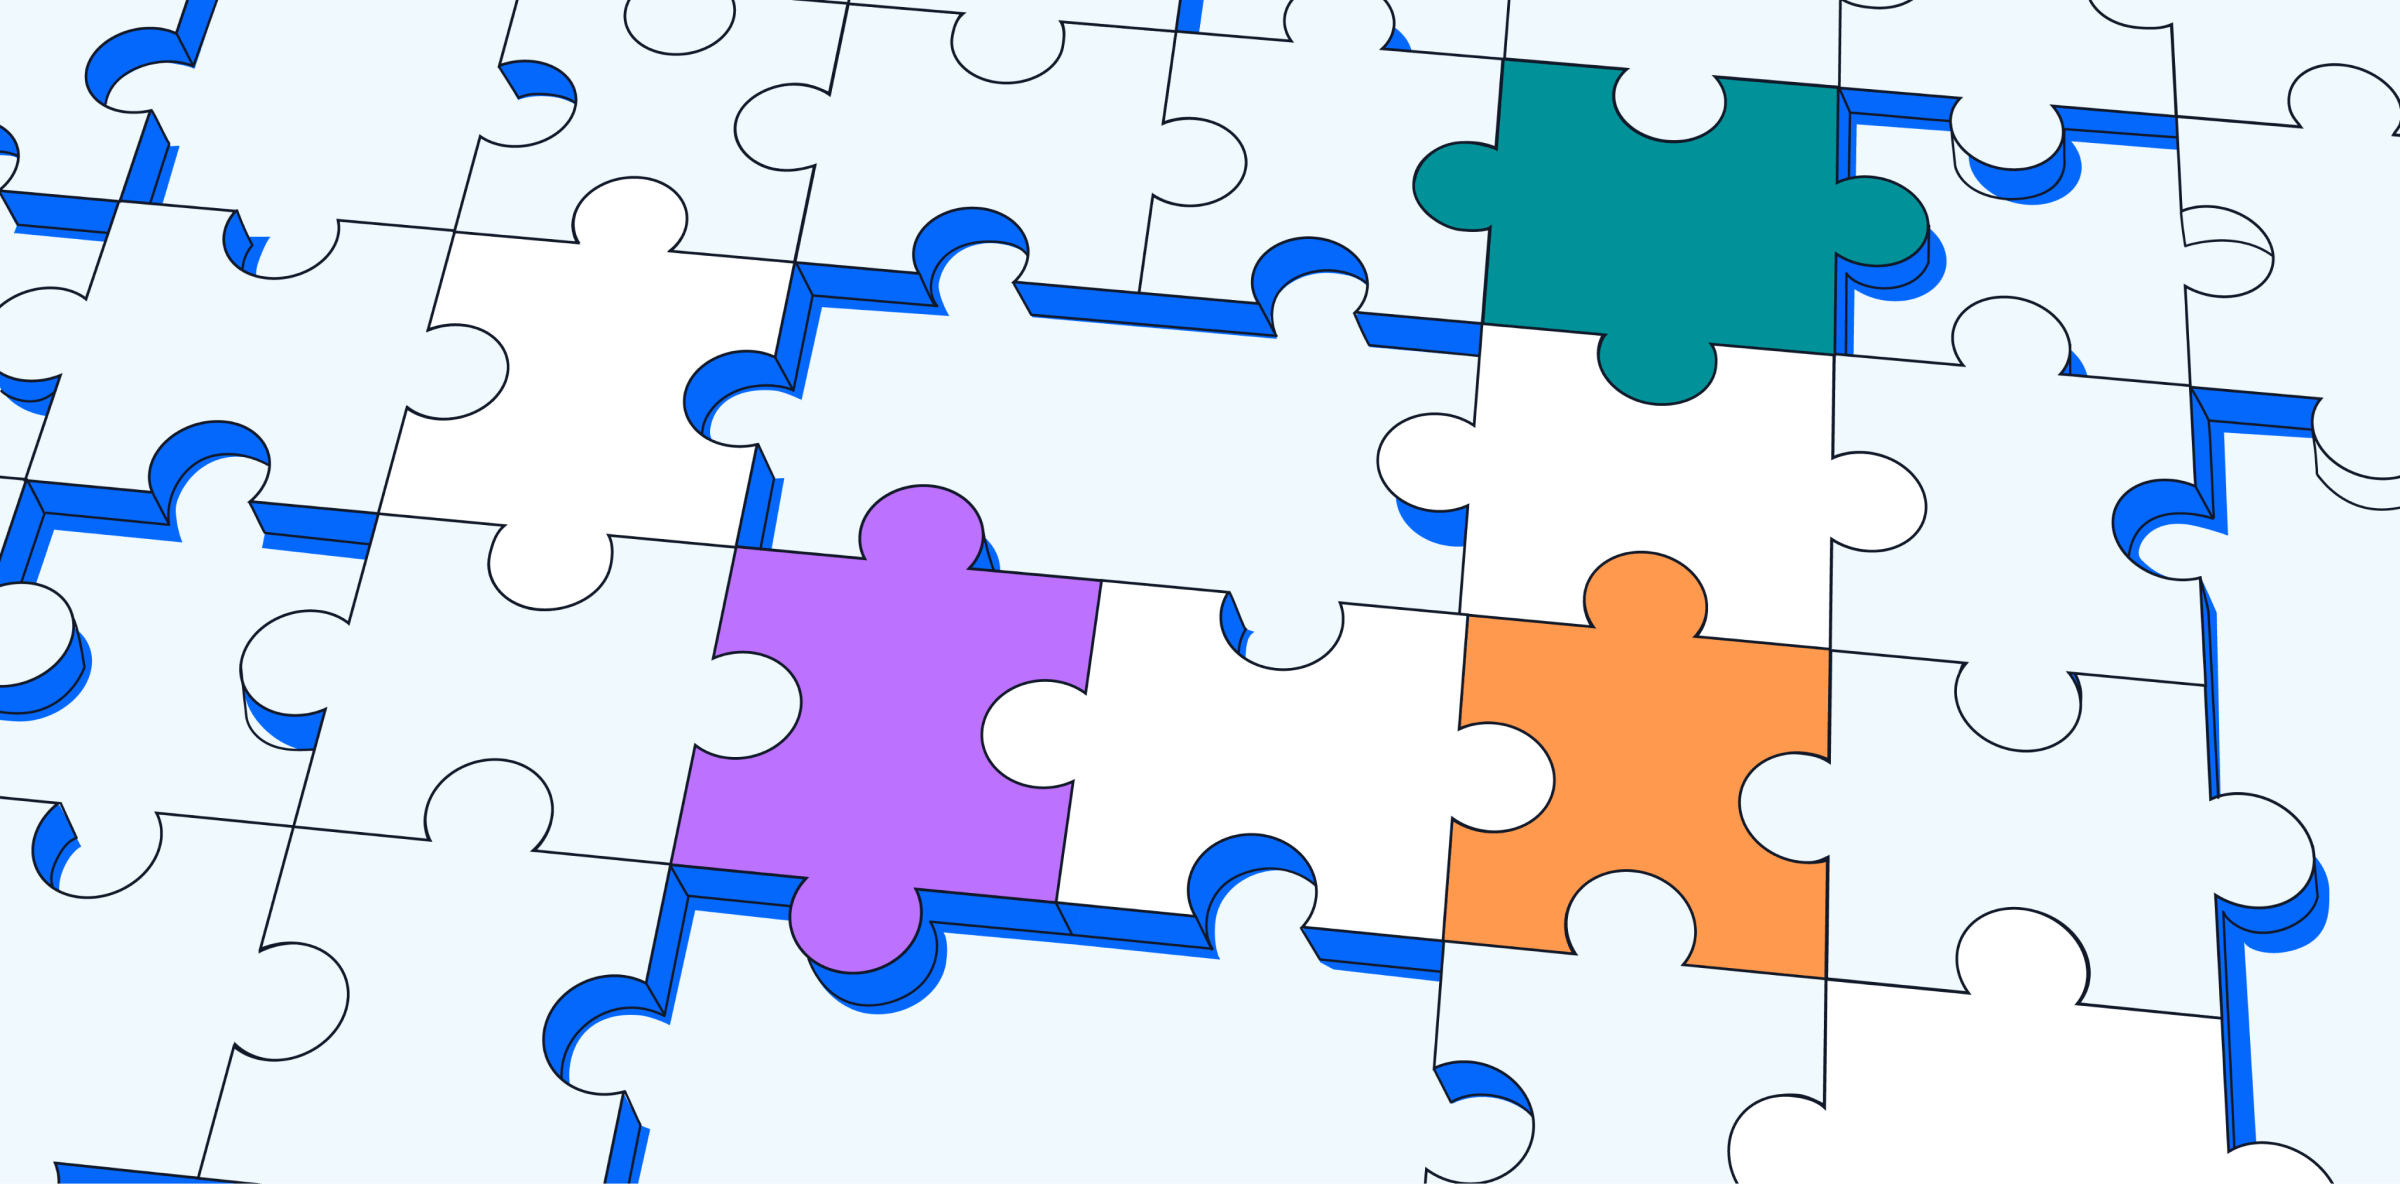 inclusive design principles puzzle illustration